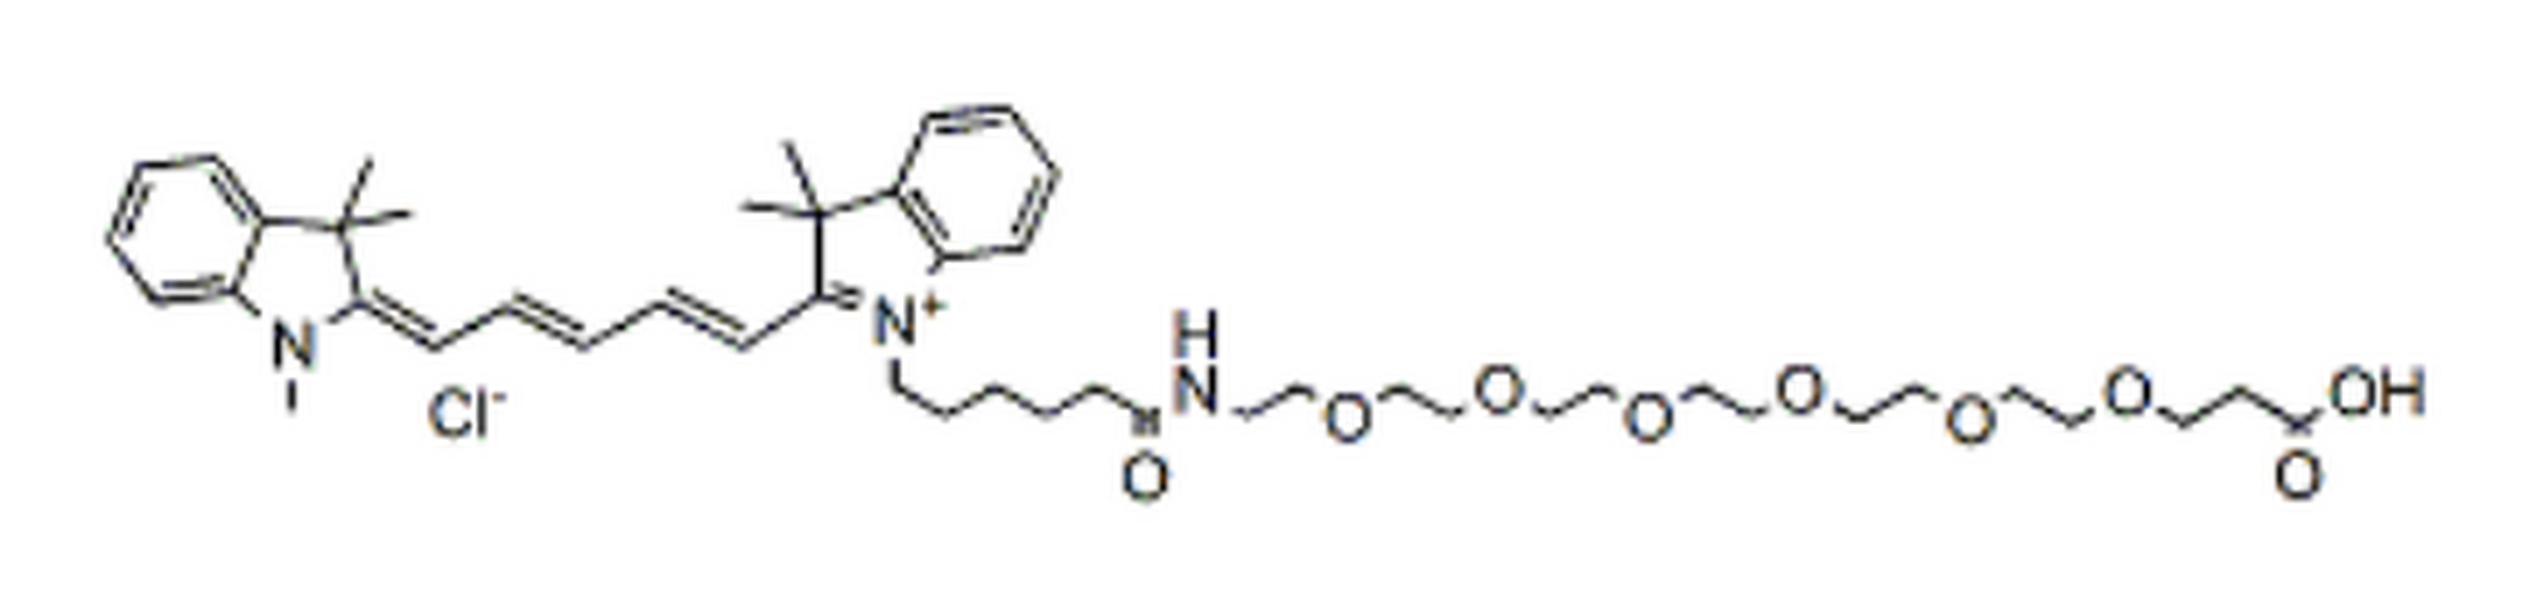 Cy5-PEG6-acid